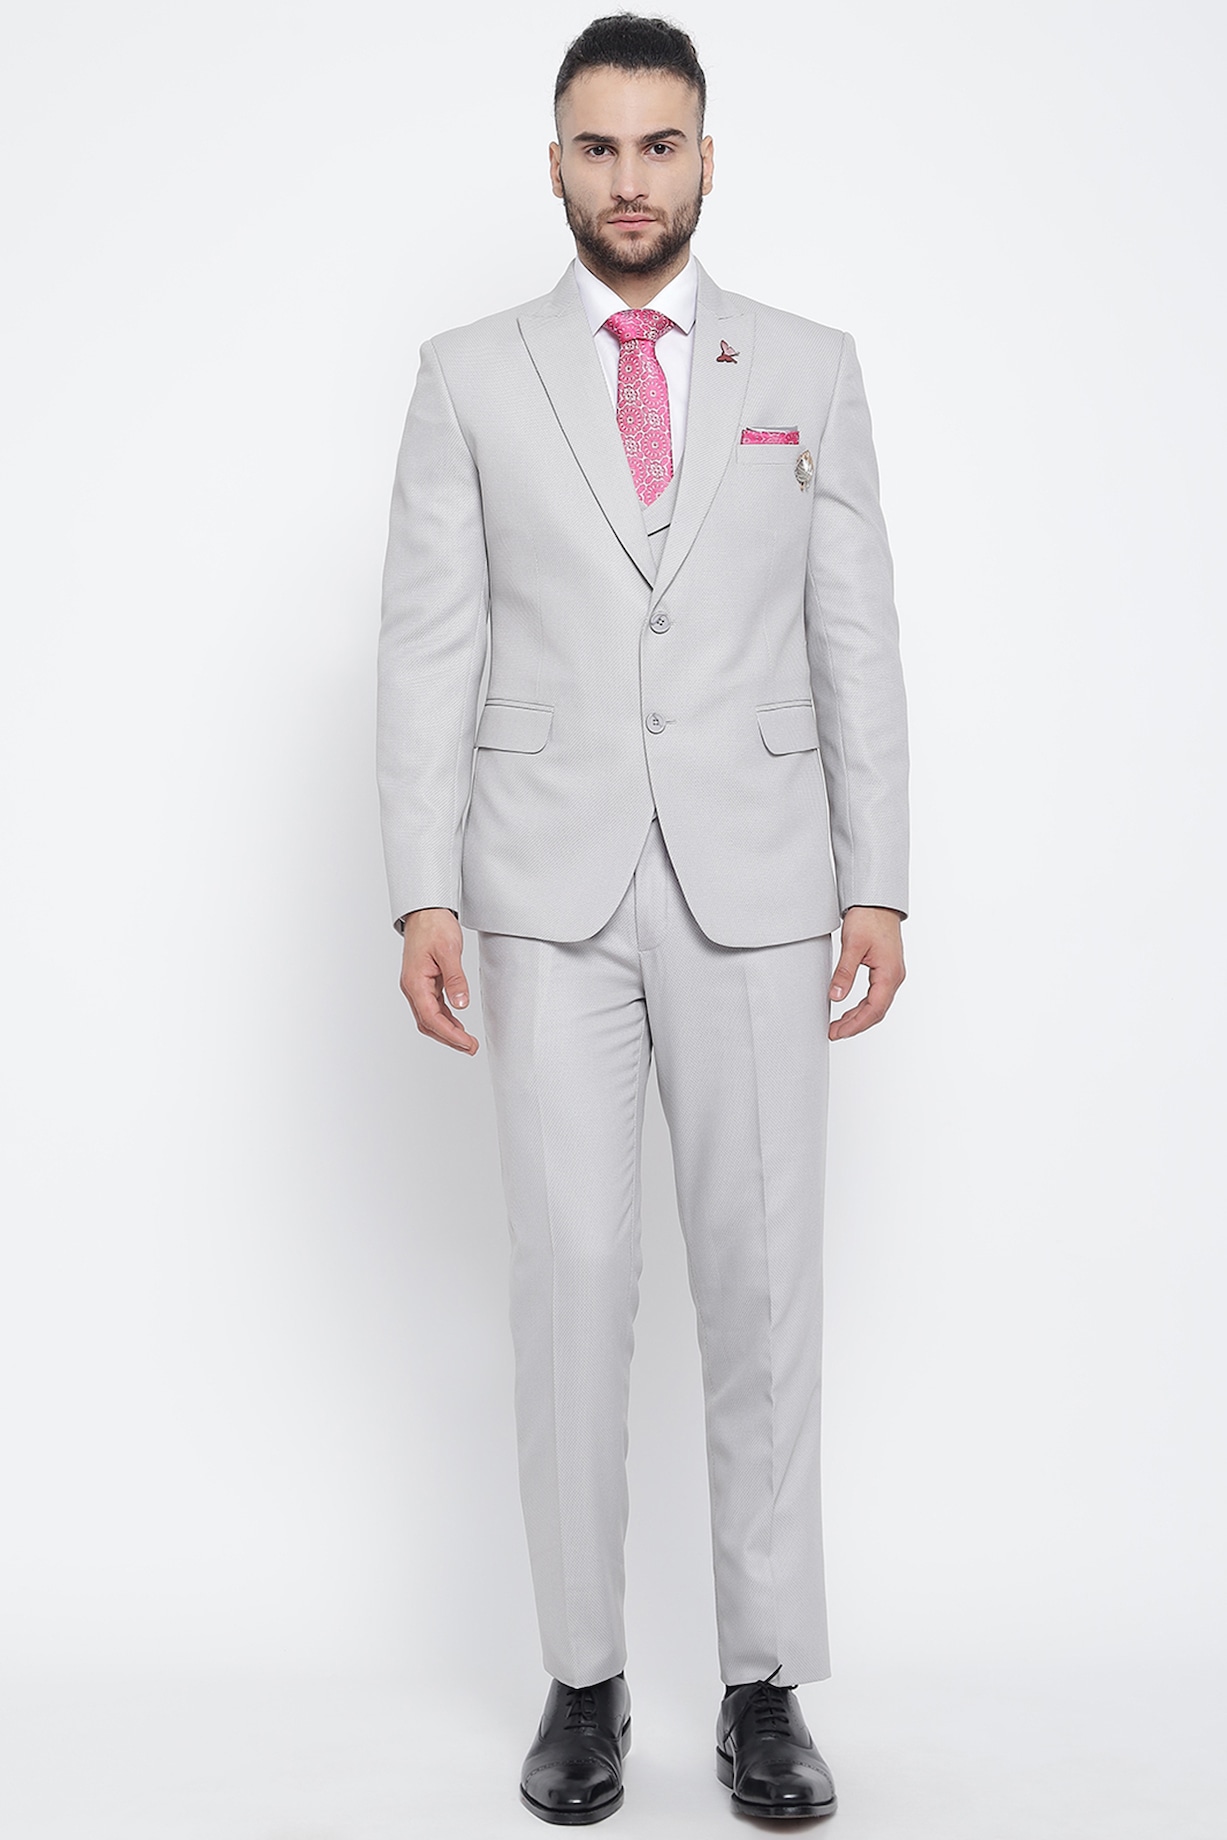 Melange Grey Suit Set With Tie Design by Soniya G Men at Pernia's Pop Up  Shop 2024